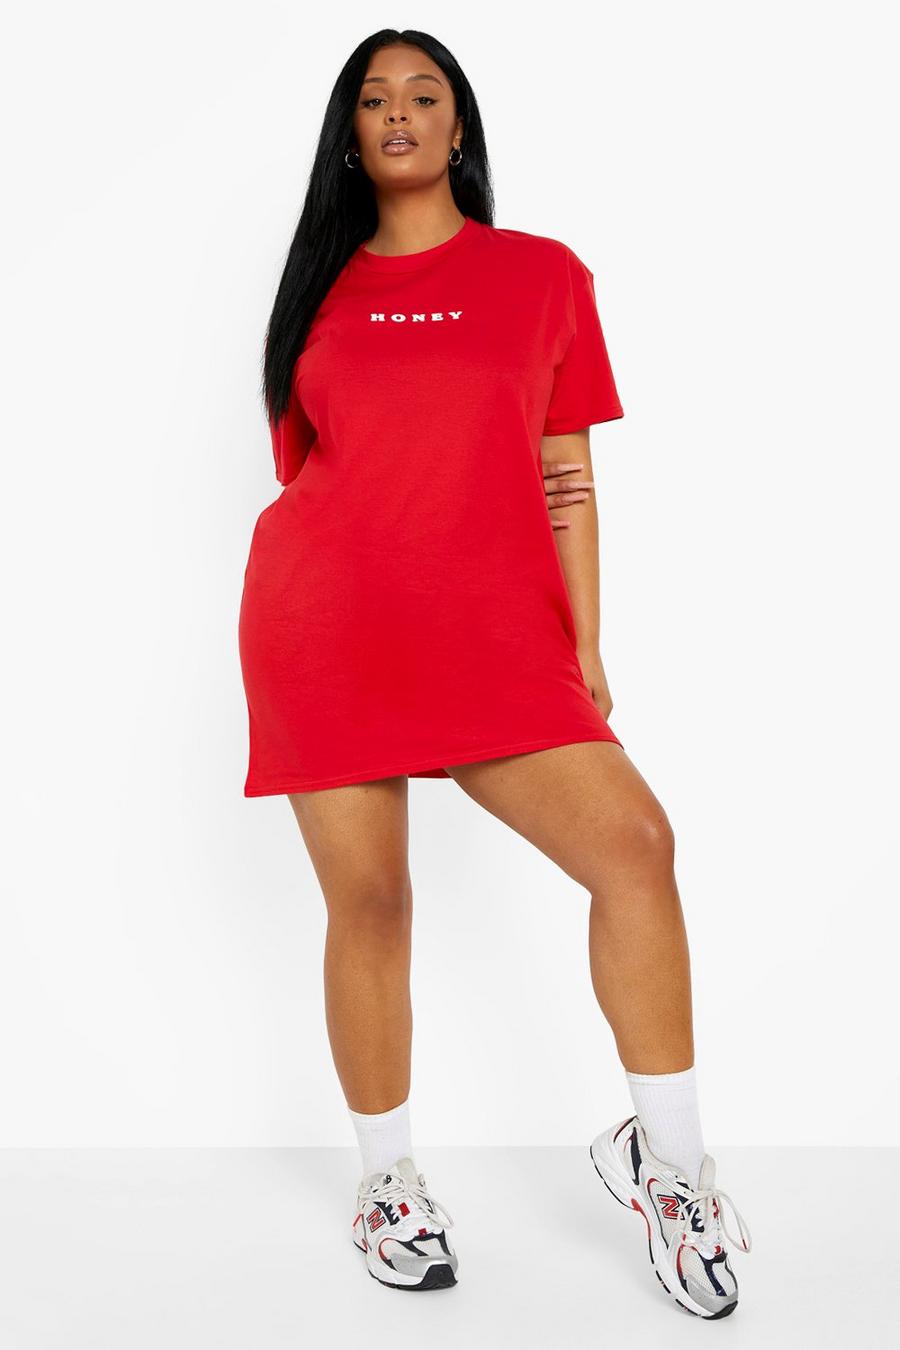 Boohoo UK - Farah Vintage Chest Shirt  Women's Red Plus Honey Oversized T  - Shirt Dress